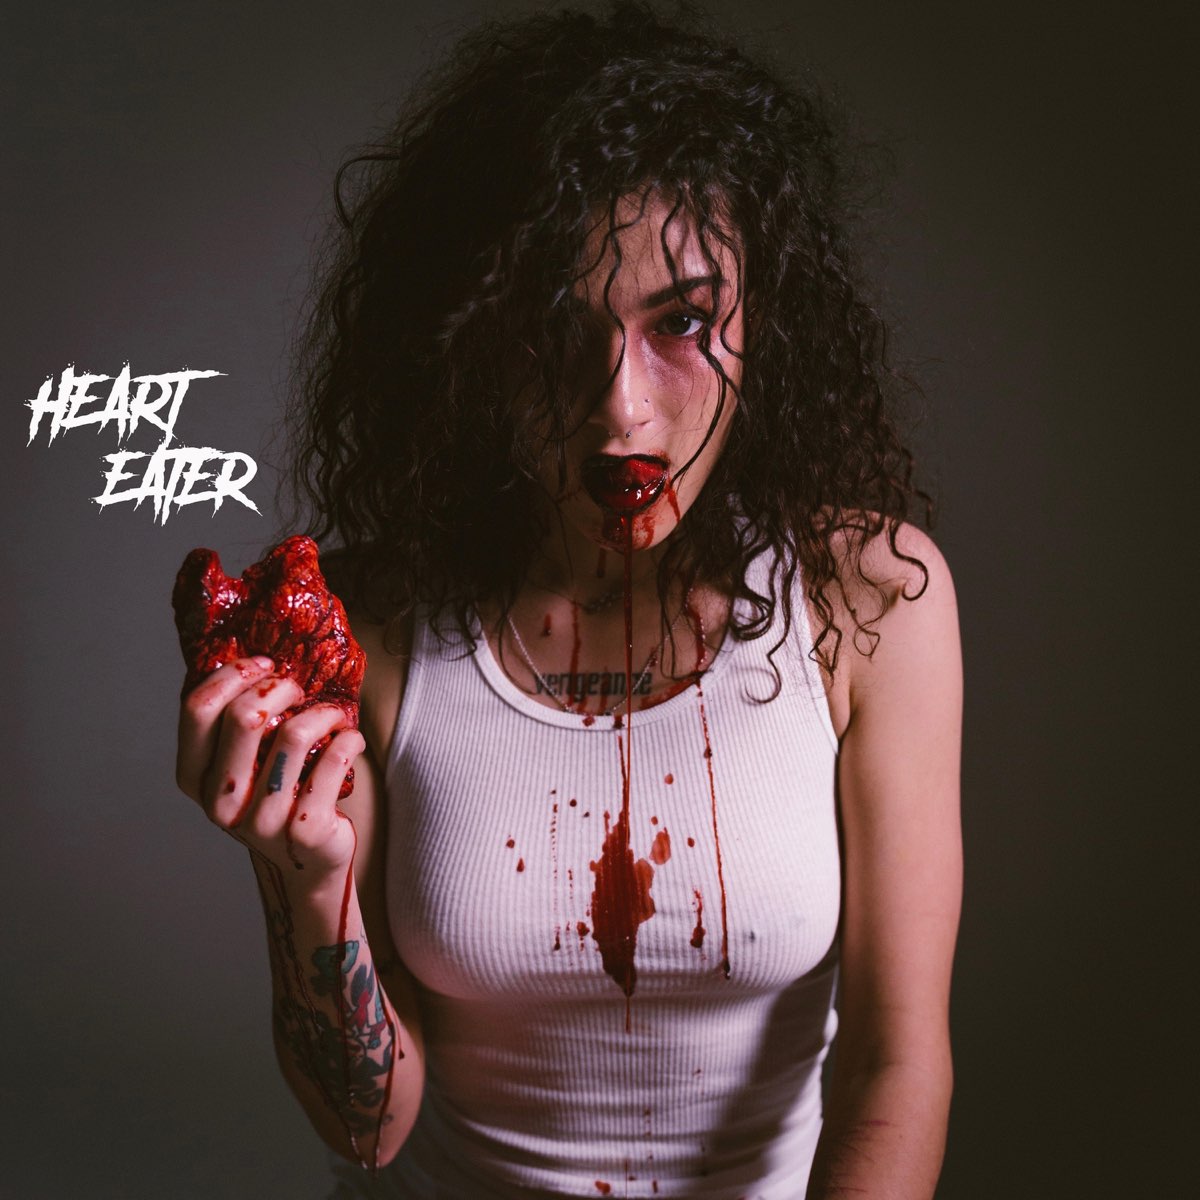 Hearteater Single By Xxxtentacion On Apple Music